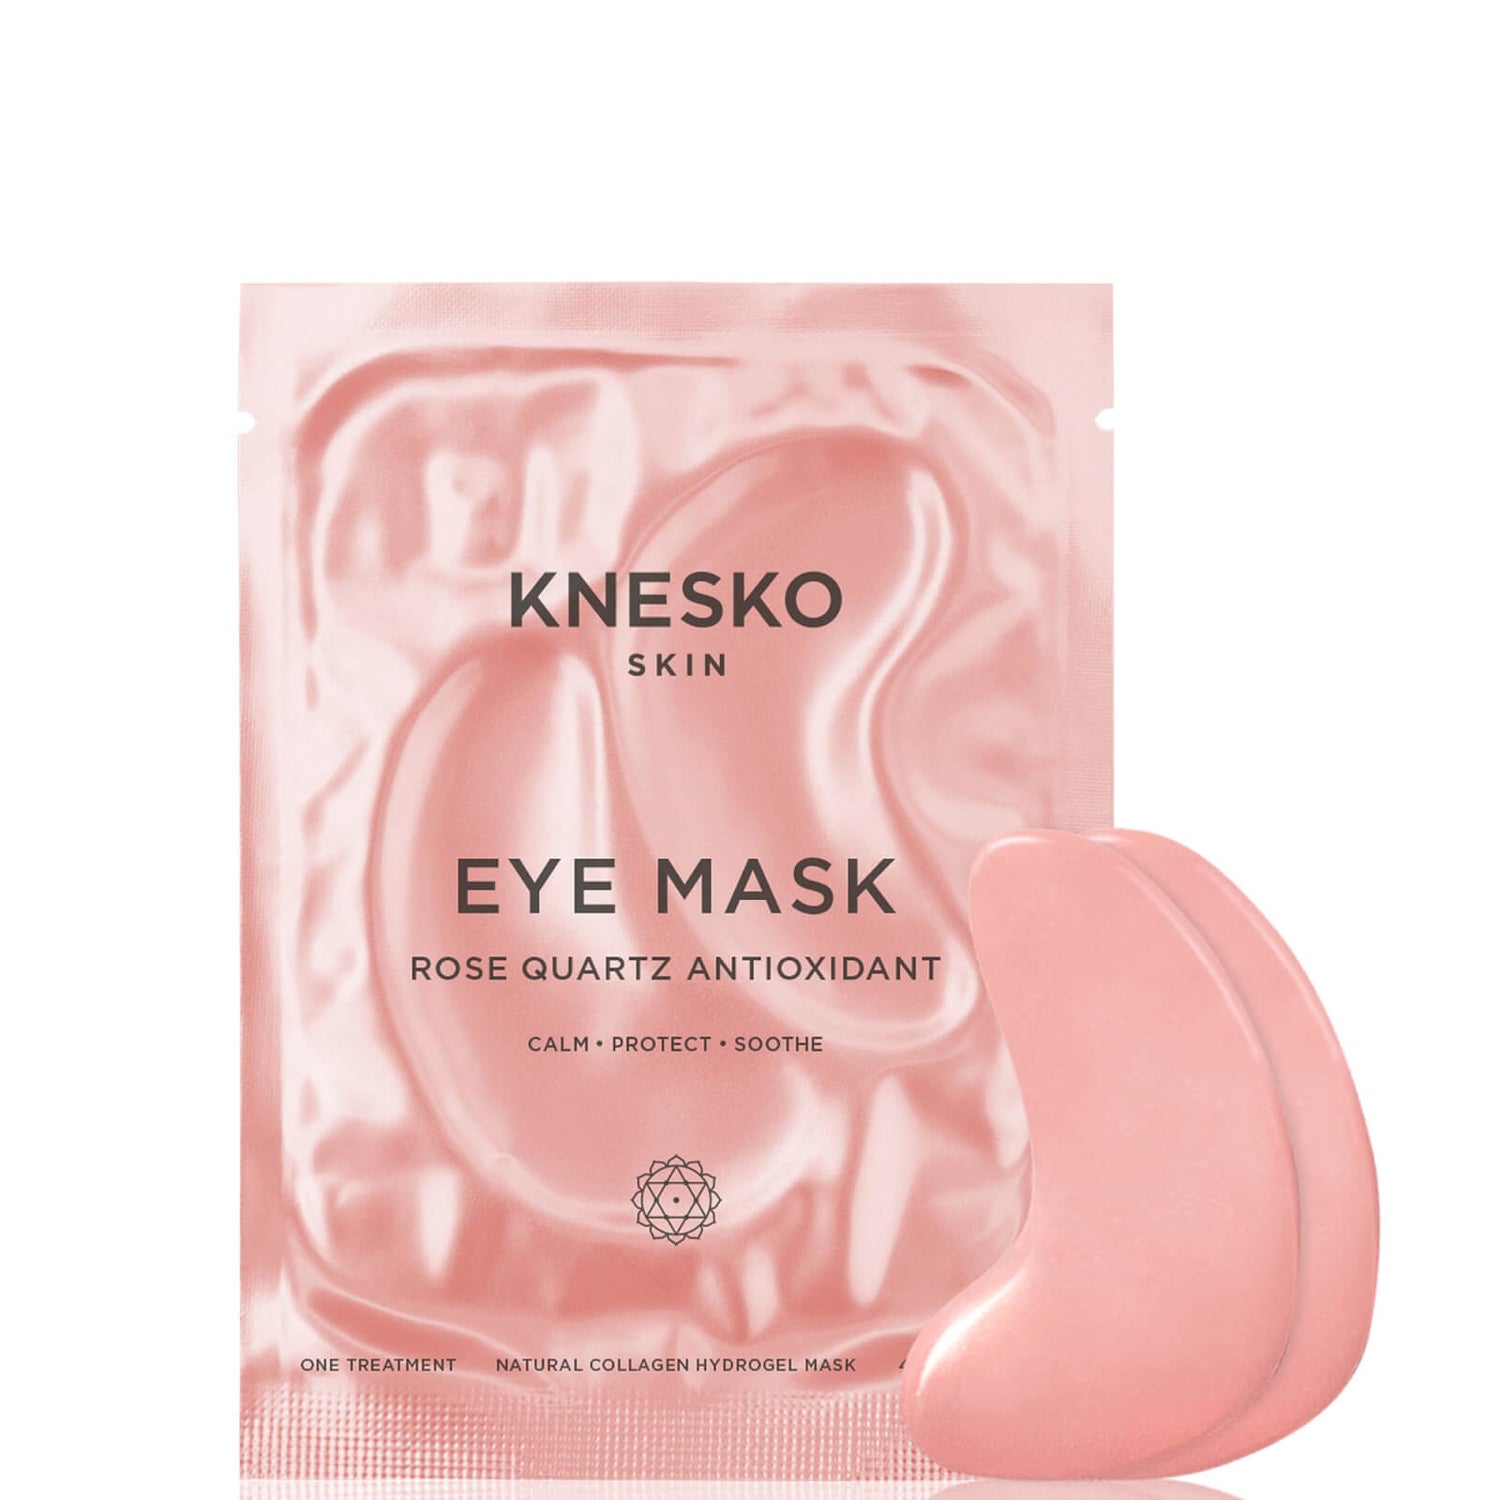 Knesko Skin Rose Quartz Antioxidant Eye Mask 6 Treatments 25ml